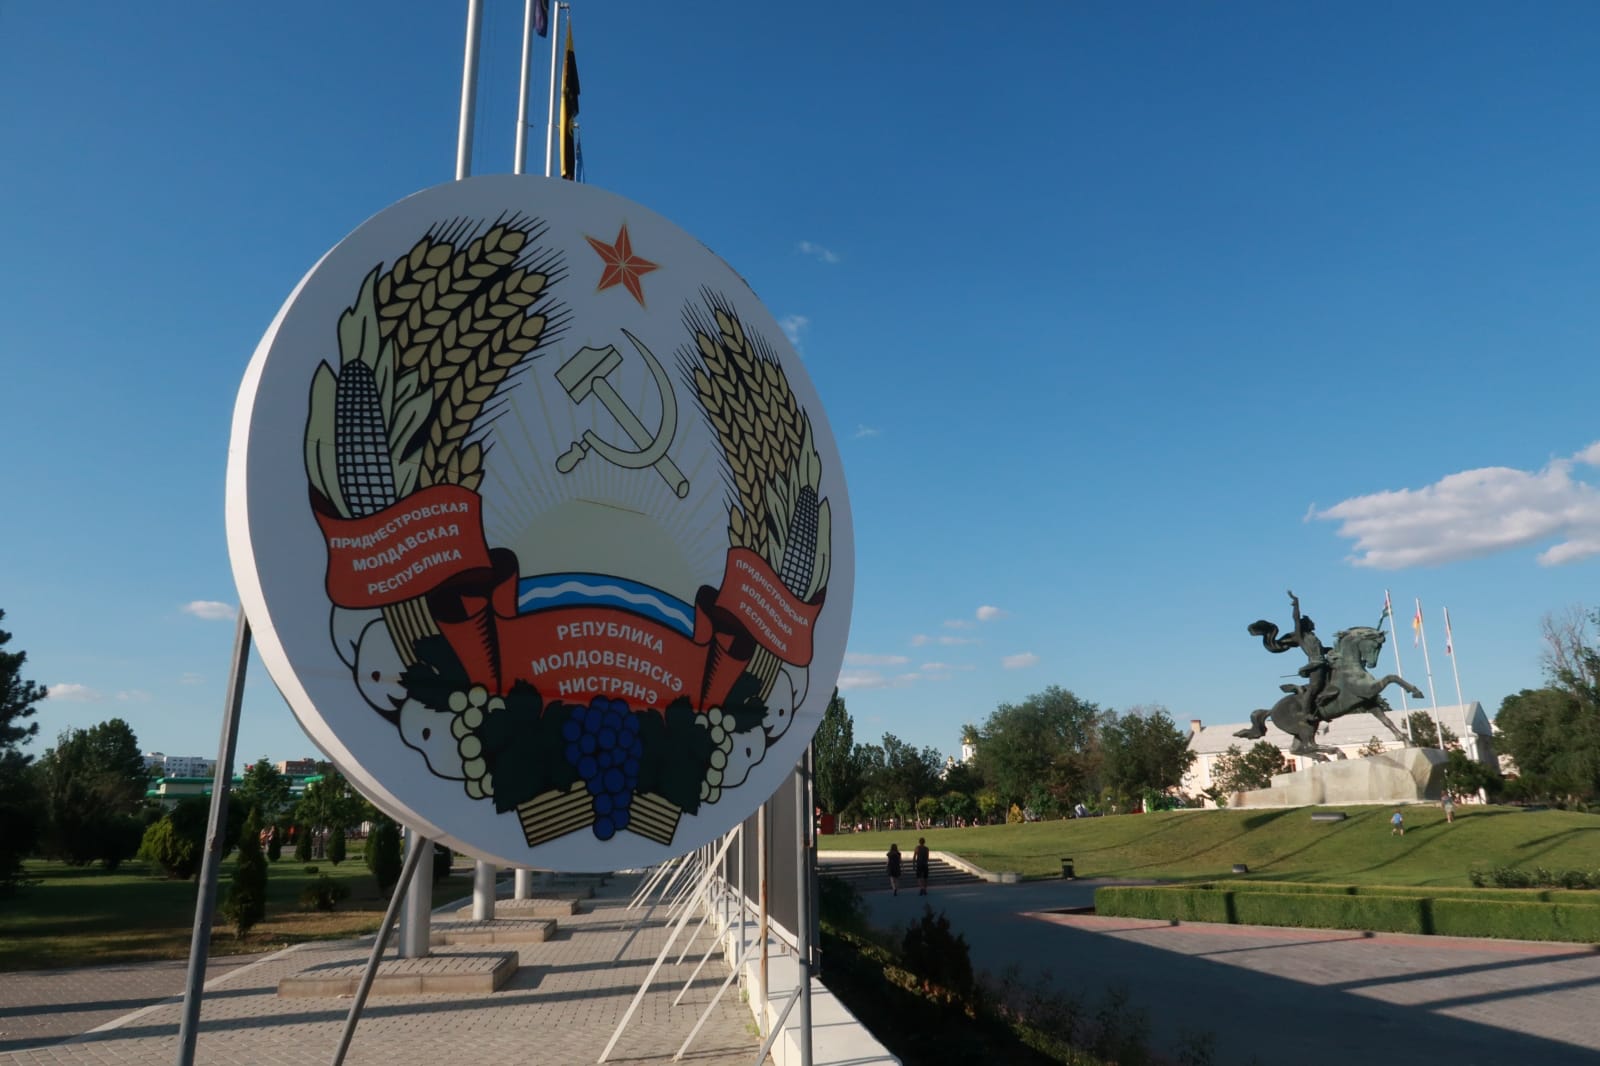 transnistrisches Emblem